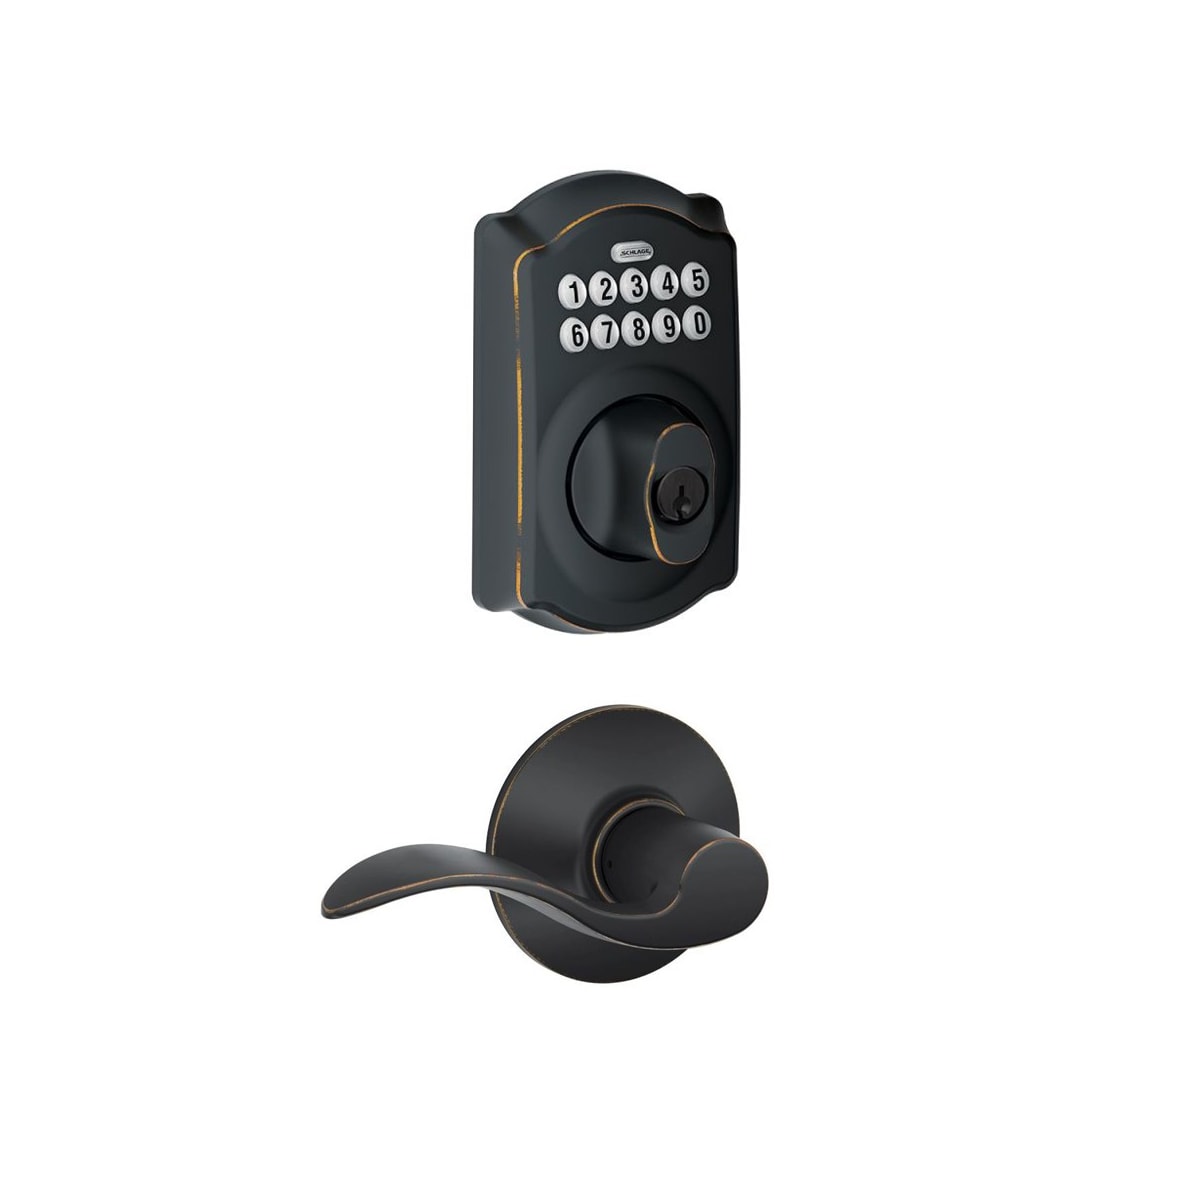 Schlage Camelot/Accent Electronic Keypad Deadbolt Door Lock & Lever Combo,  Satin Nickel